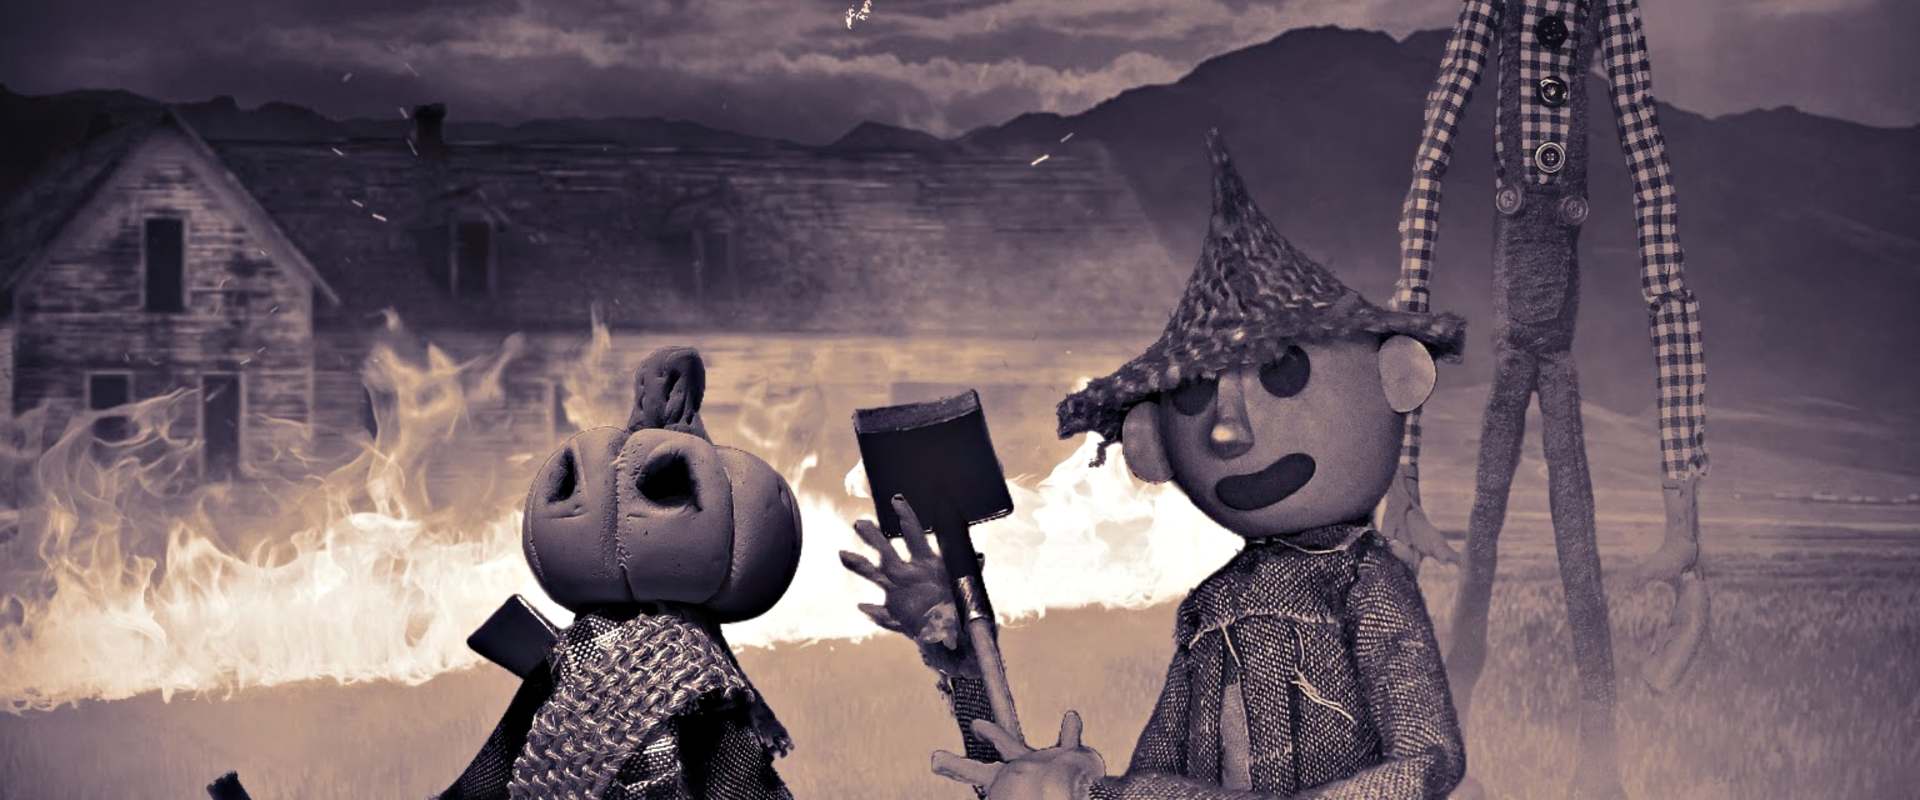 Scarecrow 2 background 2